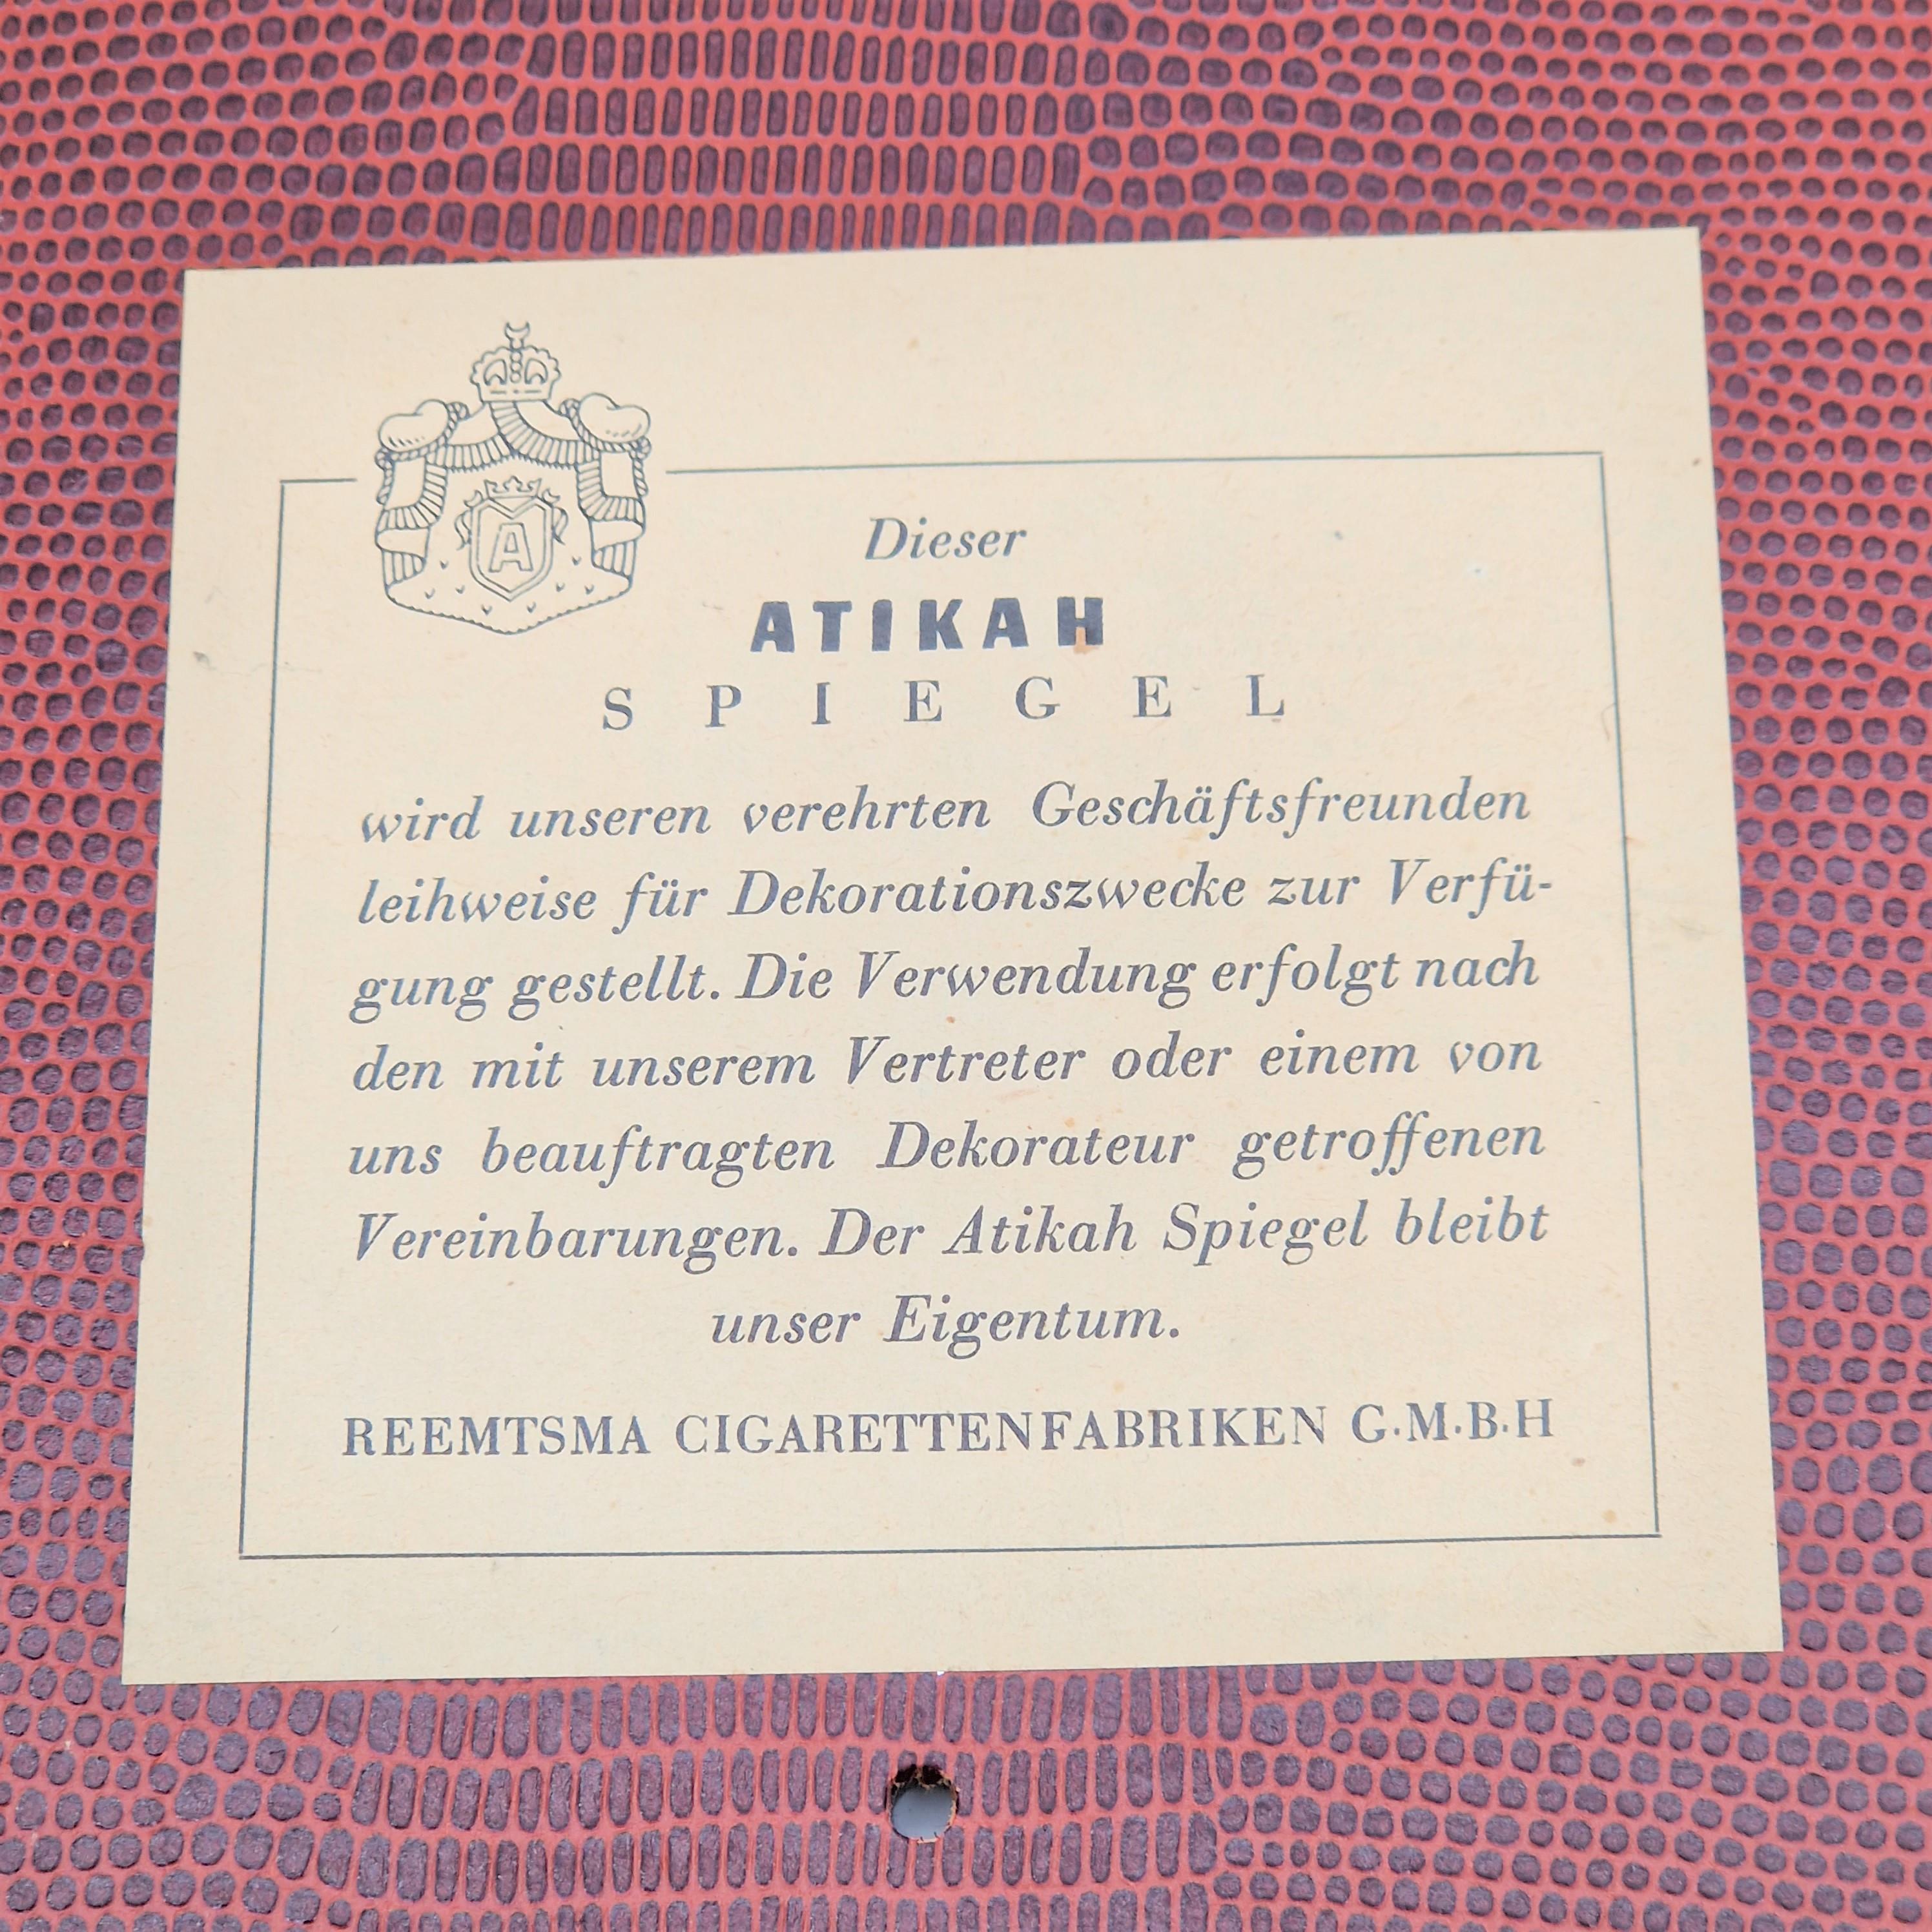 German Advertising Mirror by Raymond Peynet for Atikah Cigaretten For Sale